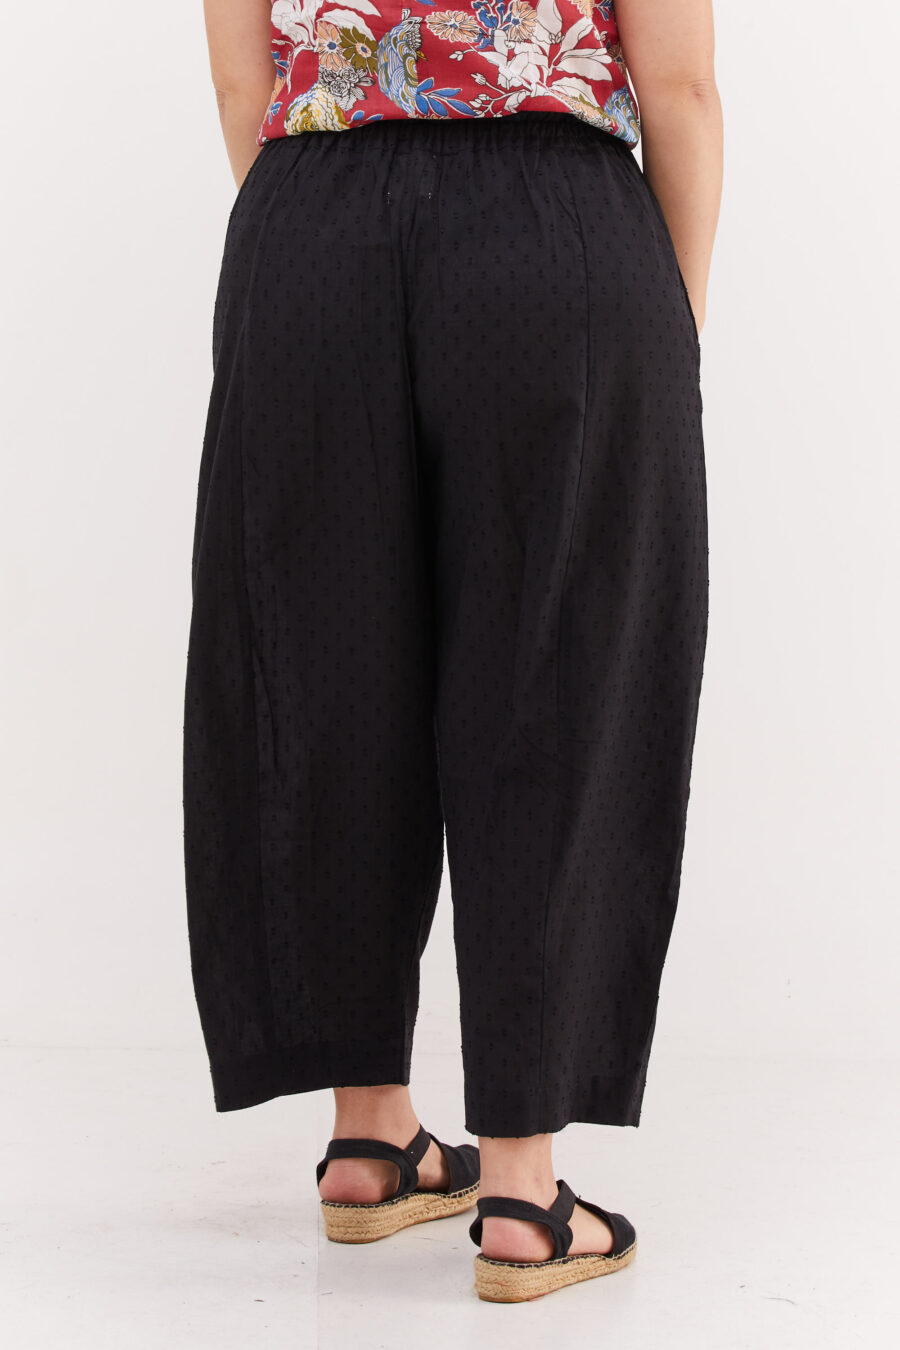 Boho chic pants| Flattering and comfortable pants – Black pants with textured black circles